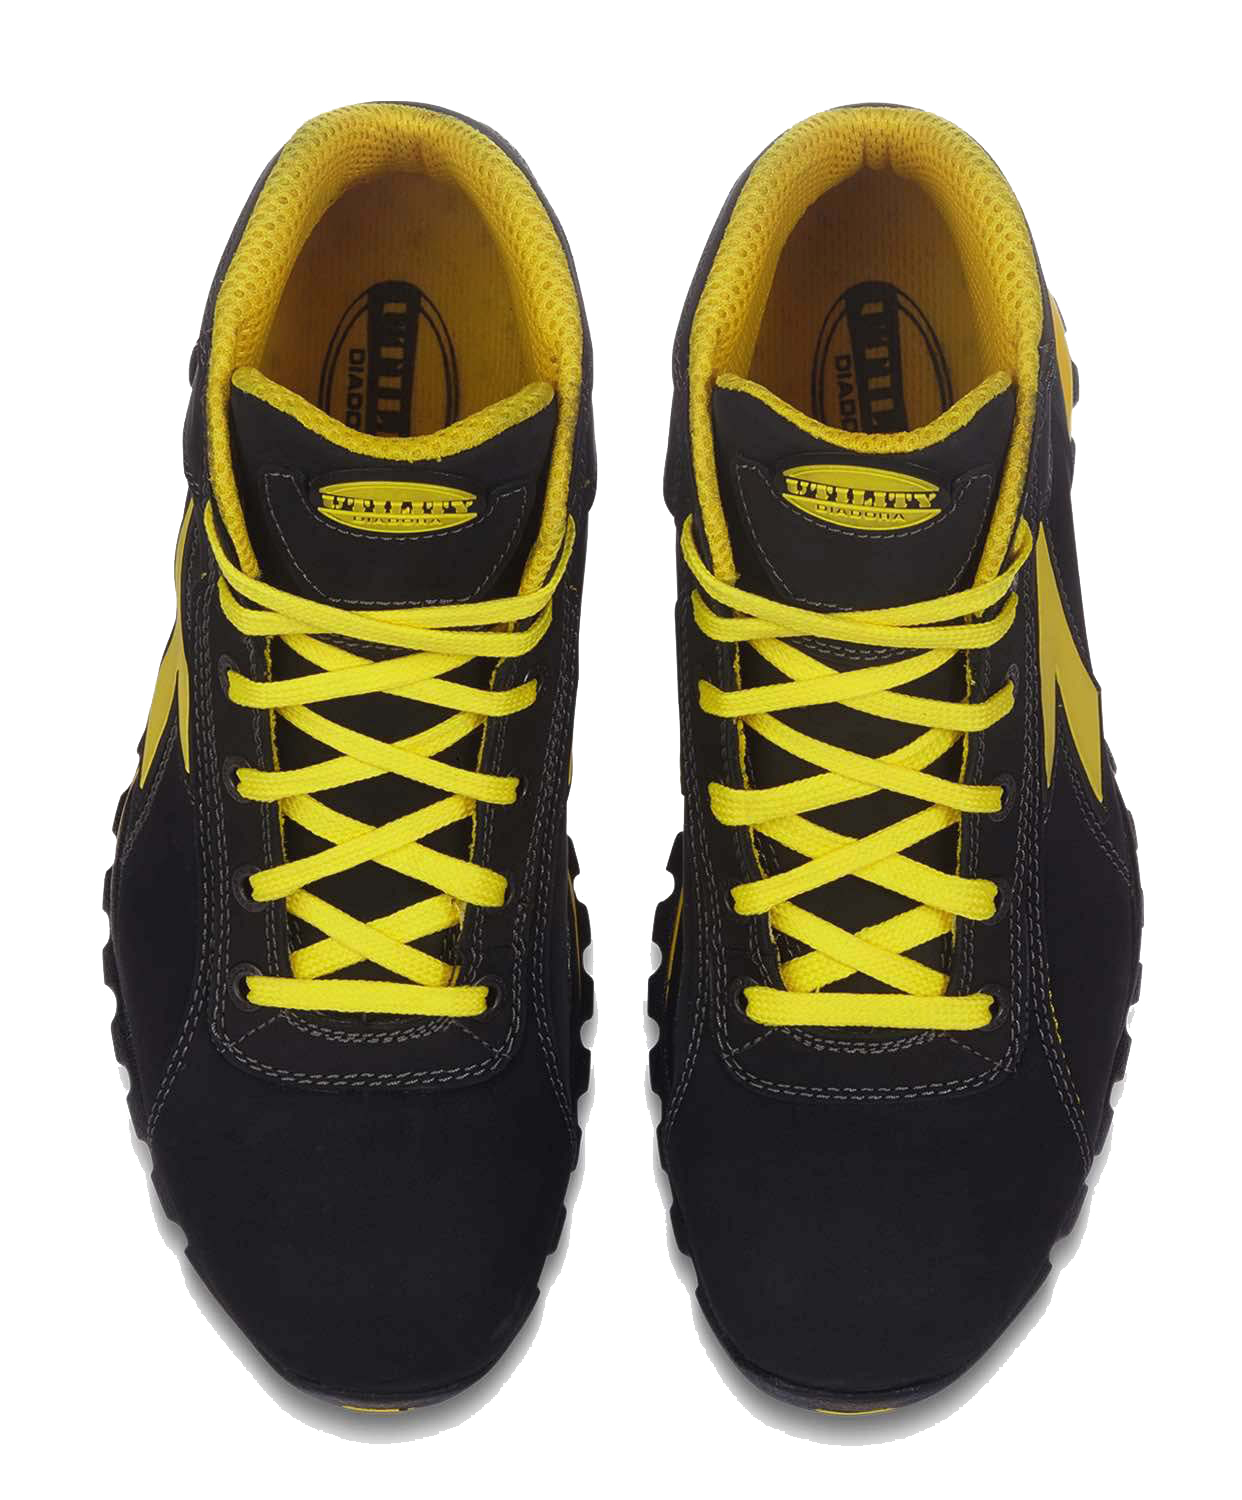 Chaussures de sécurité hautes GLOVE II HIGH S3 SRA HRO noir/jaune P47 - DIADORA SPA - 701.170234